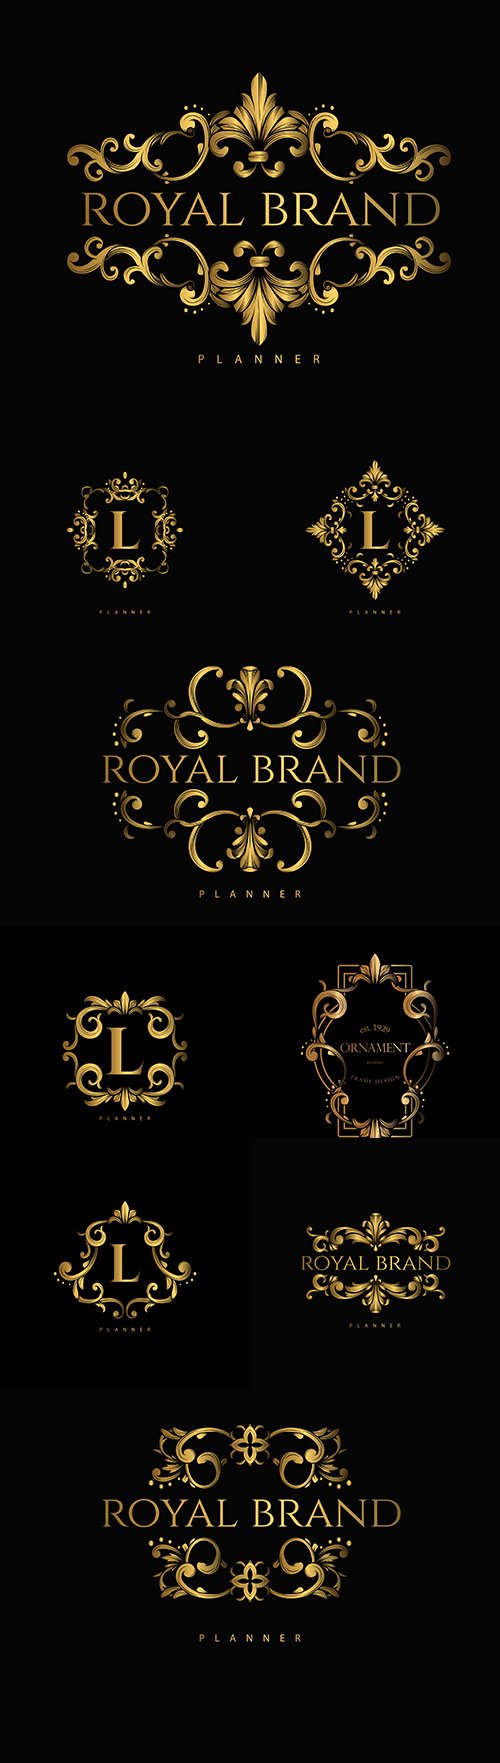 Gold luxury logo design for vintage invitations